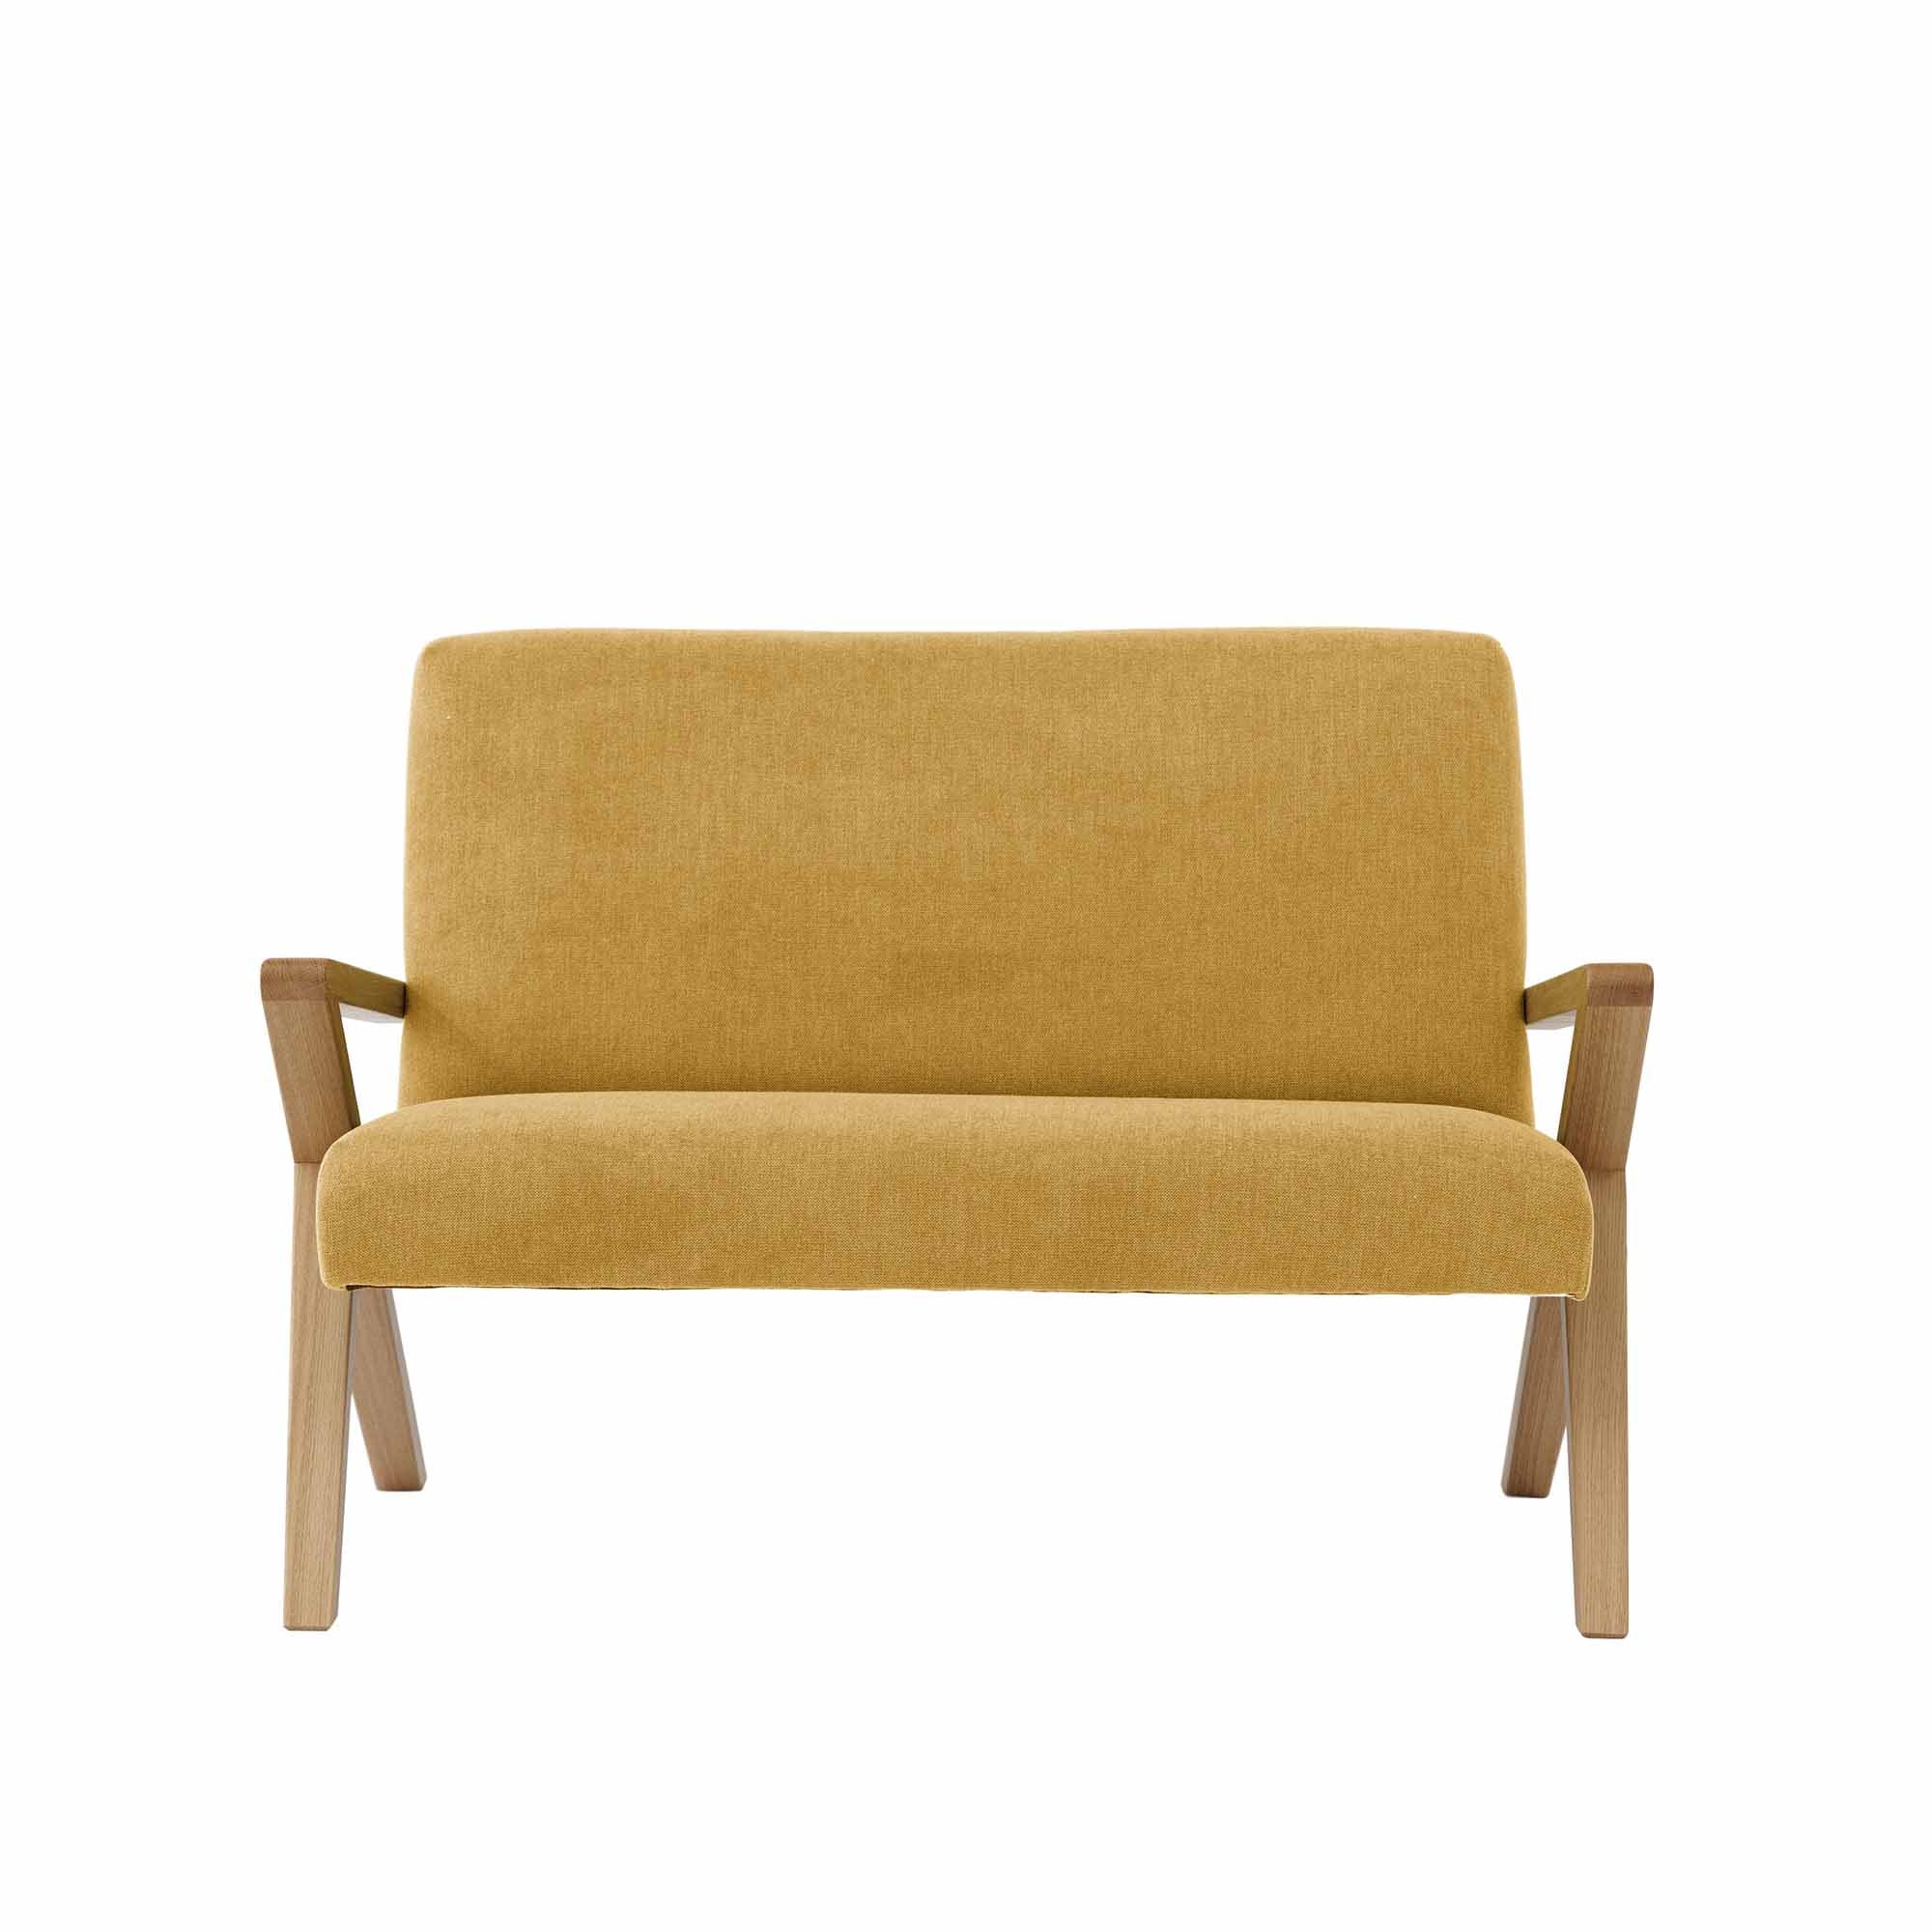 KIDS RETROSTAR 2-Seater Sofa, Oak Wood Frame, Natural yellow fabric, front view